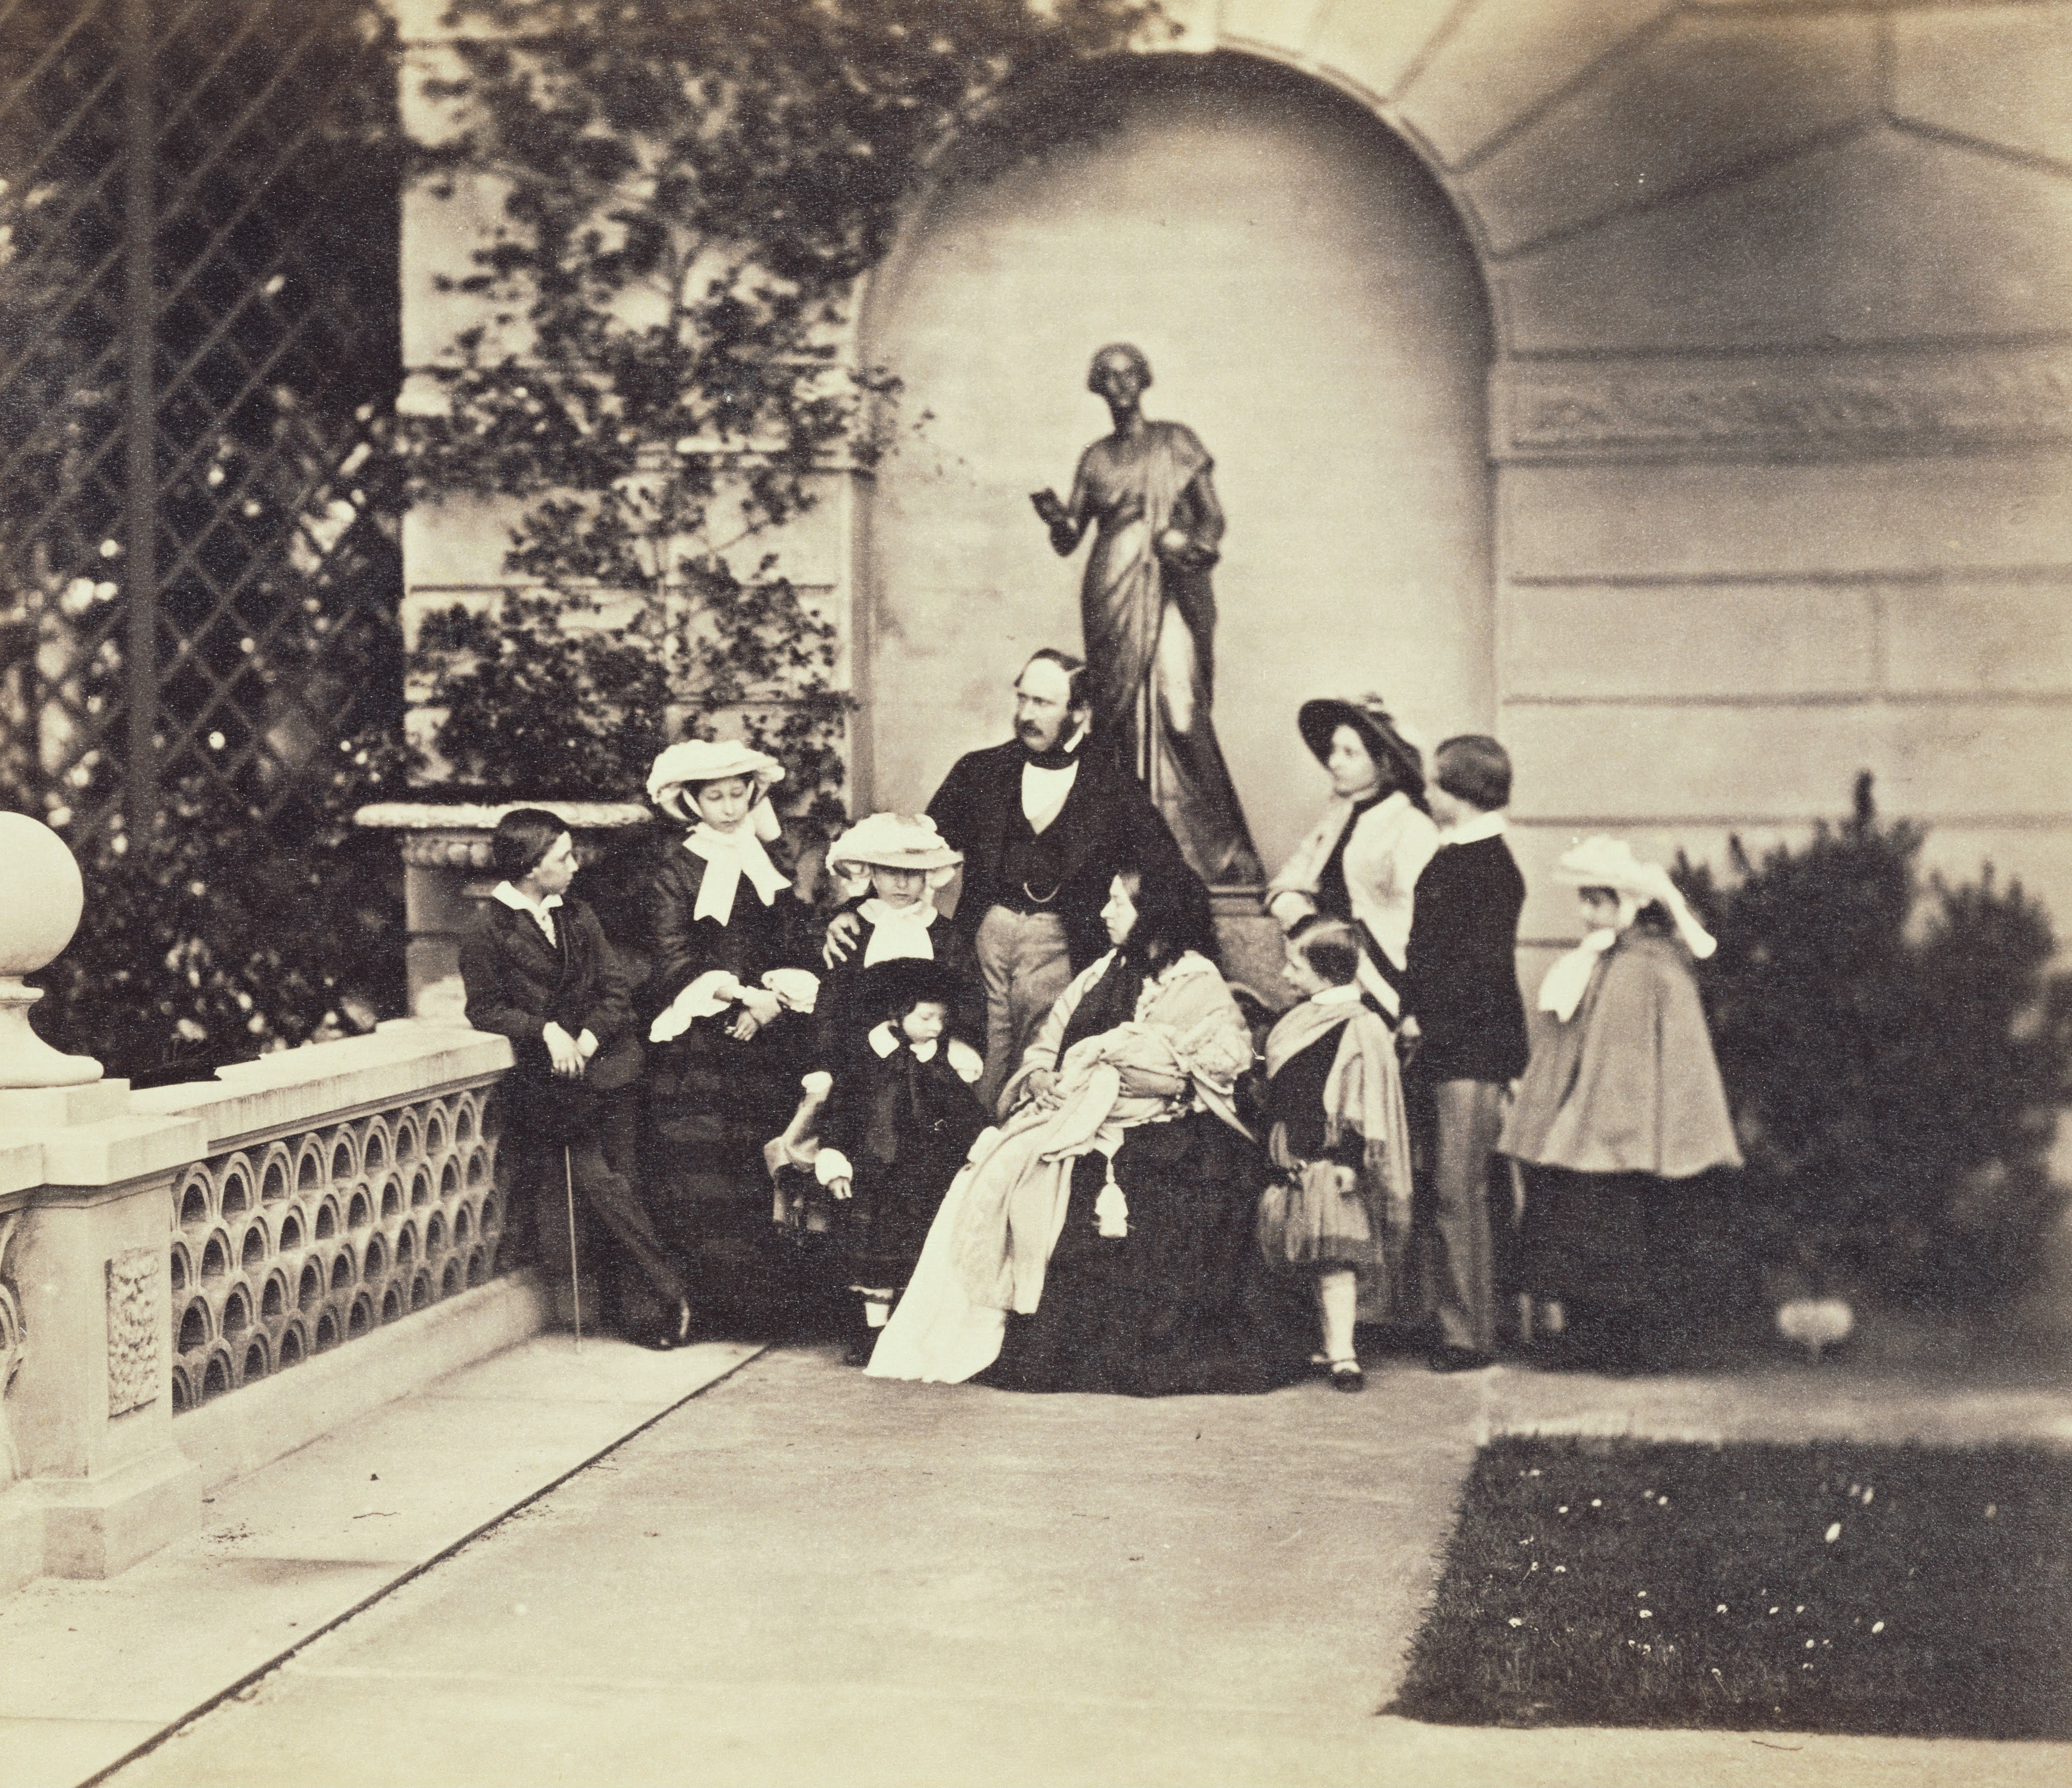 Caldesi & Montecchi - The Royal Family, Osborne 1857 - Google Art Project